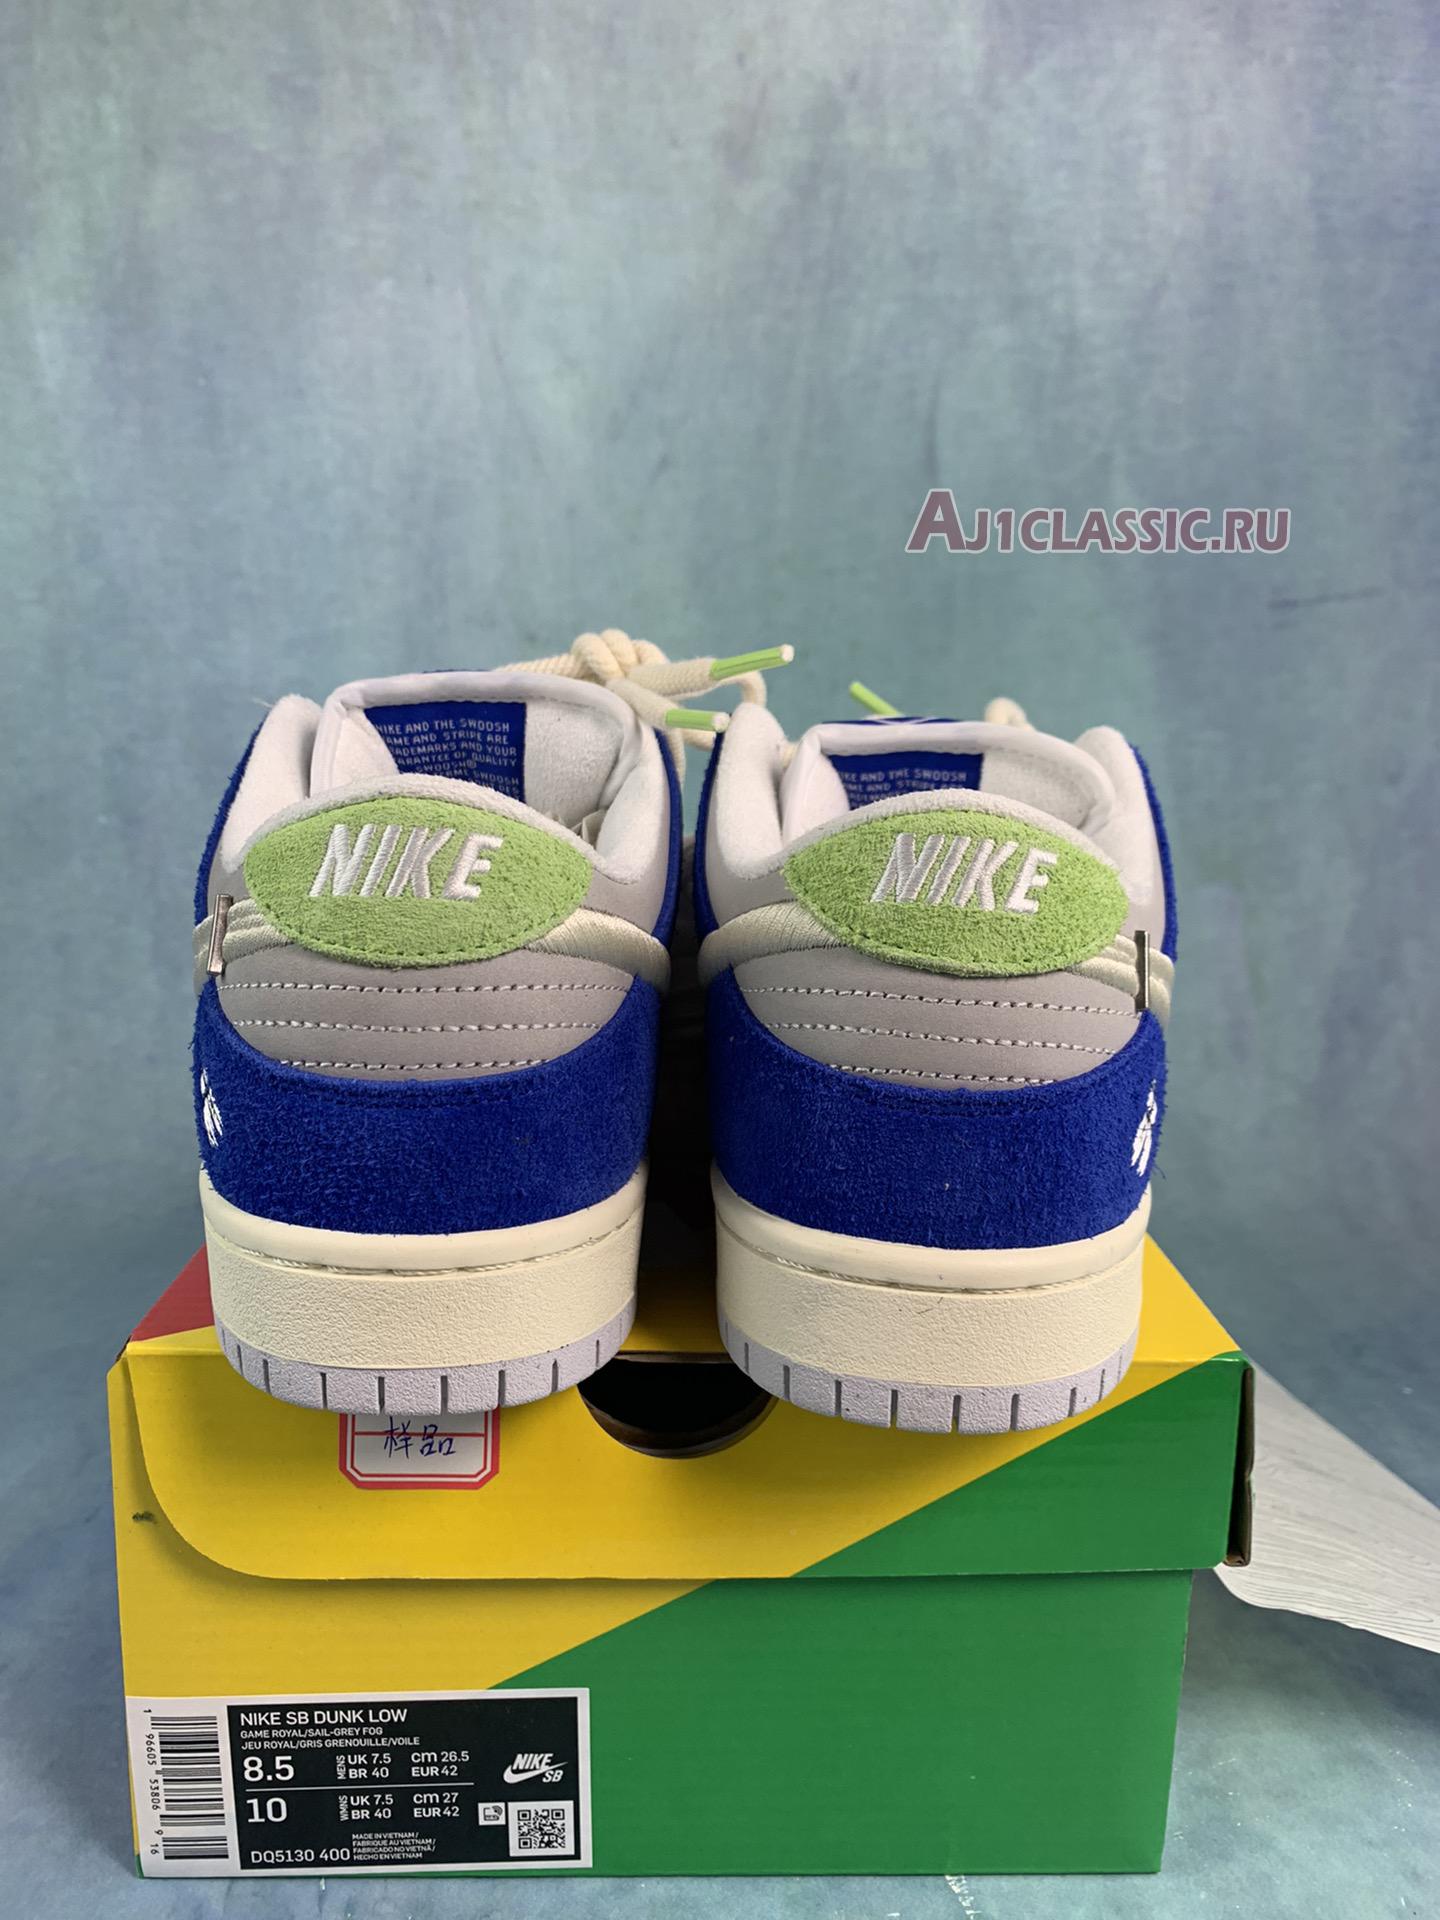 Fly Streetwear x Nike Dunk Low Pro SB "Gardenia" DQ5130-400